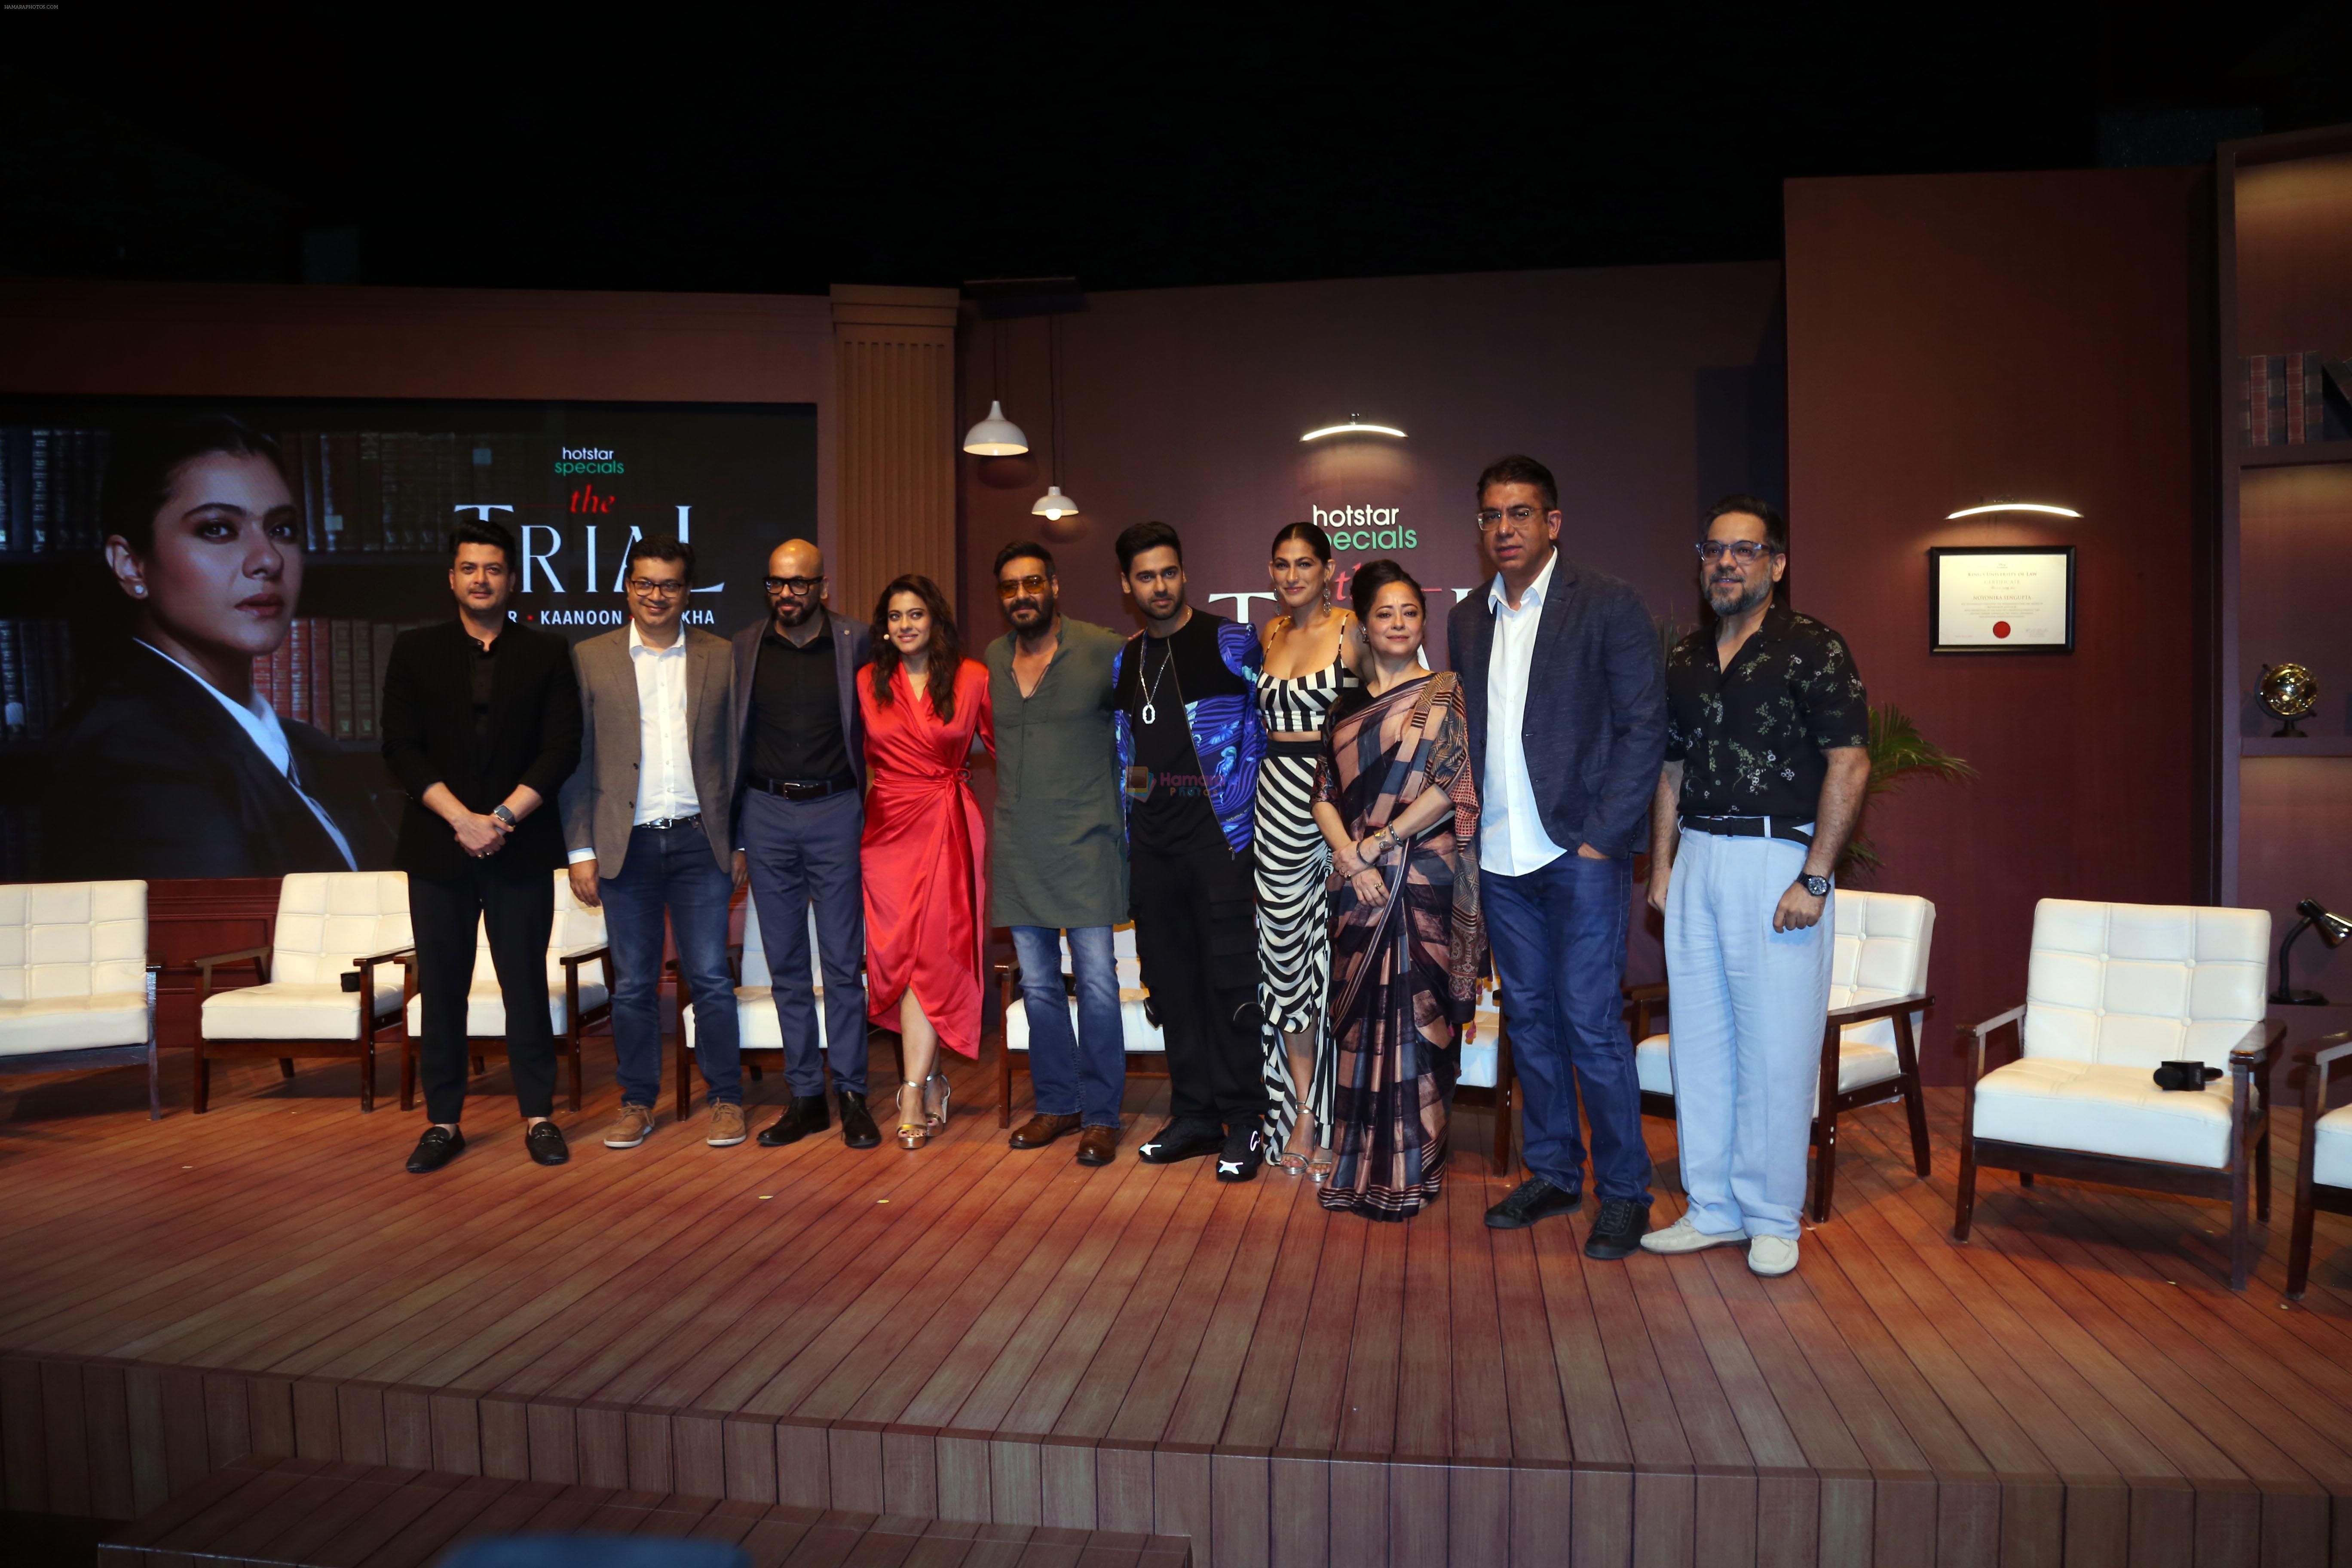 Jisshu Sengupta, Kubbra Sait, Sheeba Chaddha, Suparn Verma, Ajay Devgn, Kajol, Gaurav Pandey at the Trailer Launch of Web Series The Trial Pyaar Kanoon Dhokha